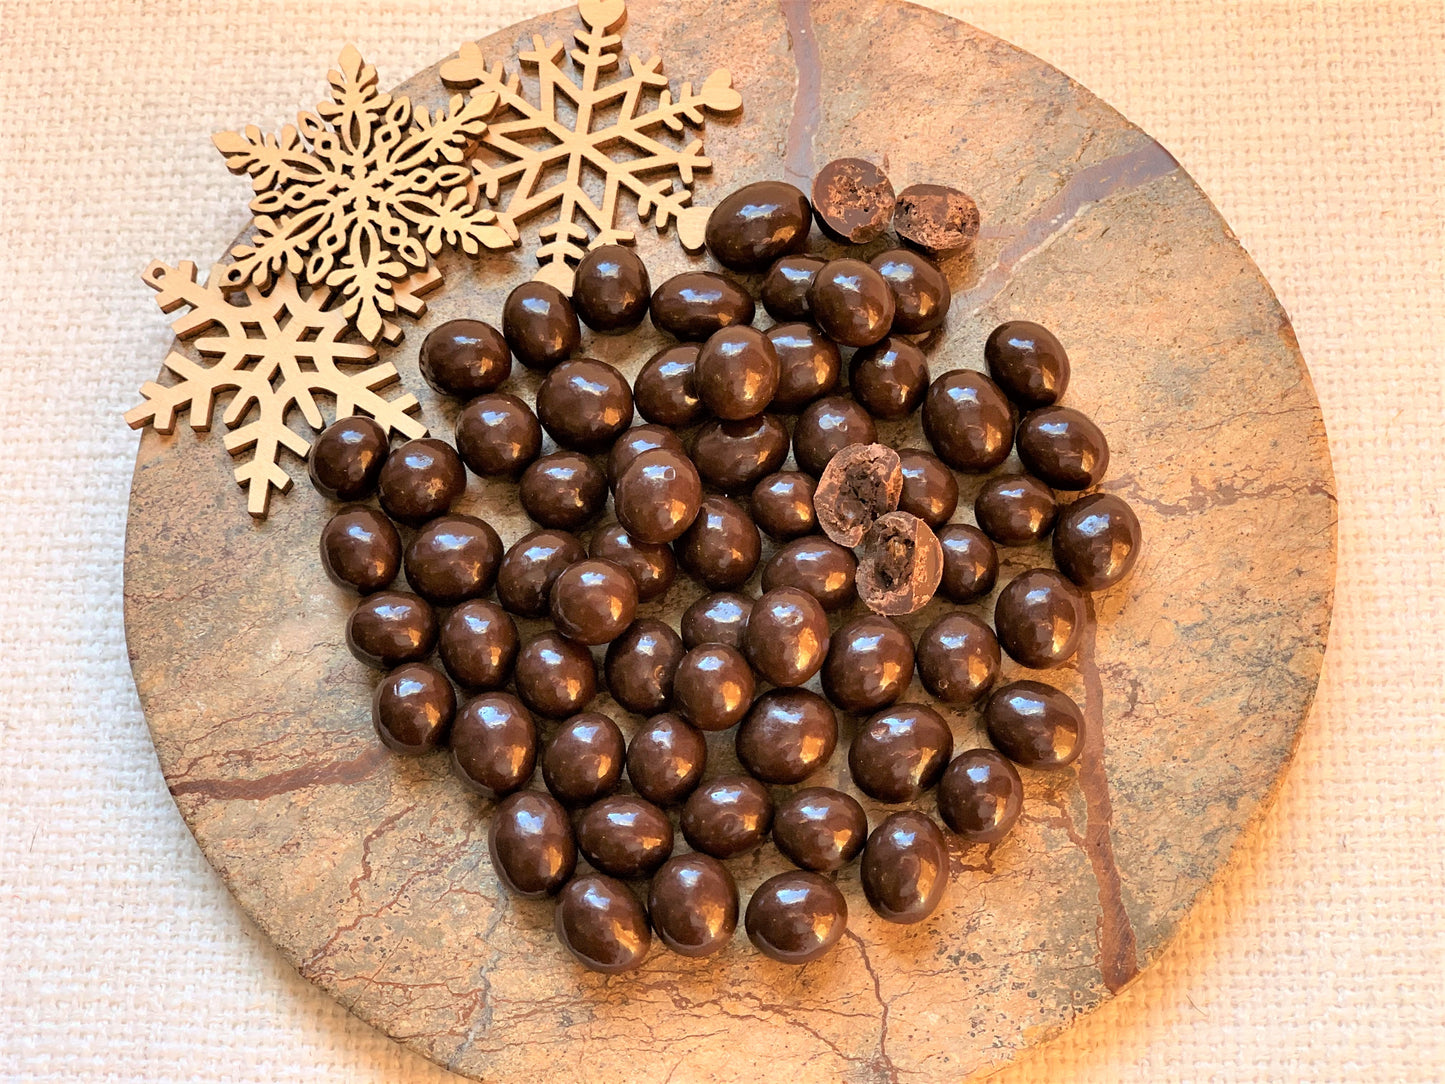 Chocolate Covered Espresso Beans